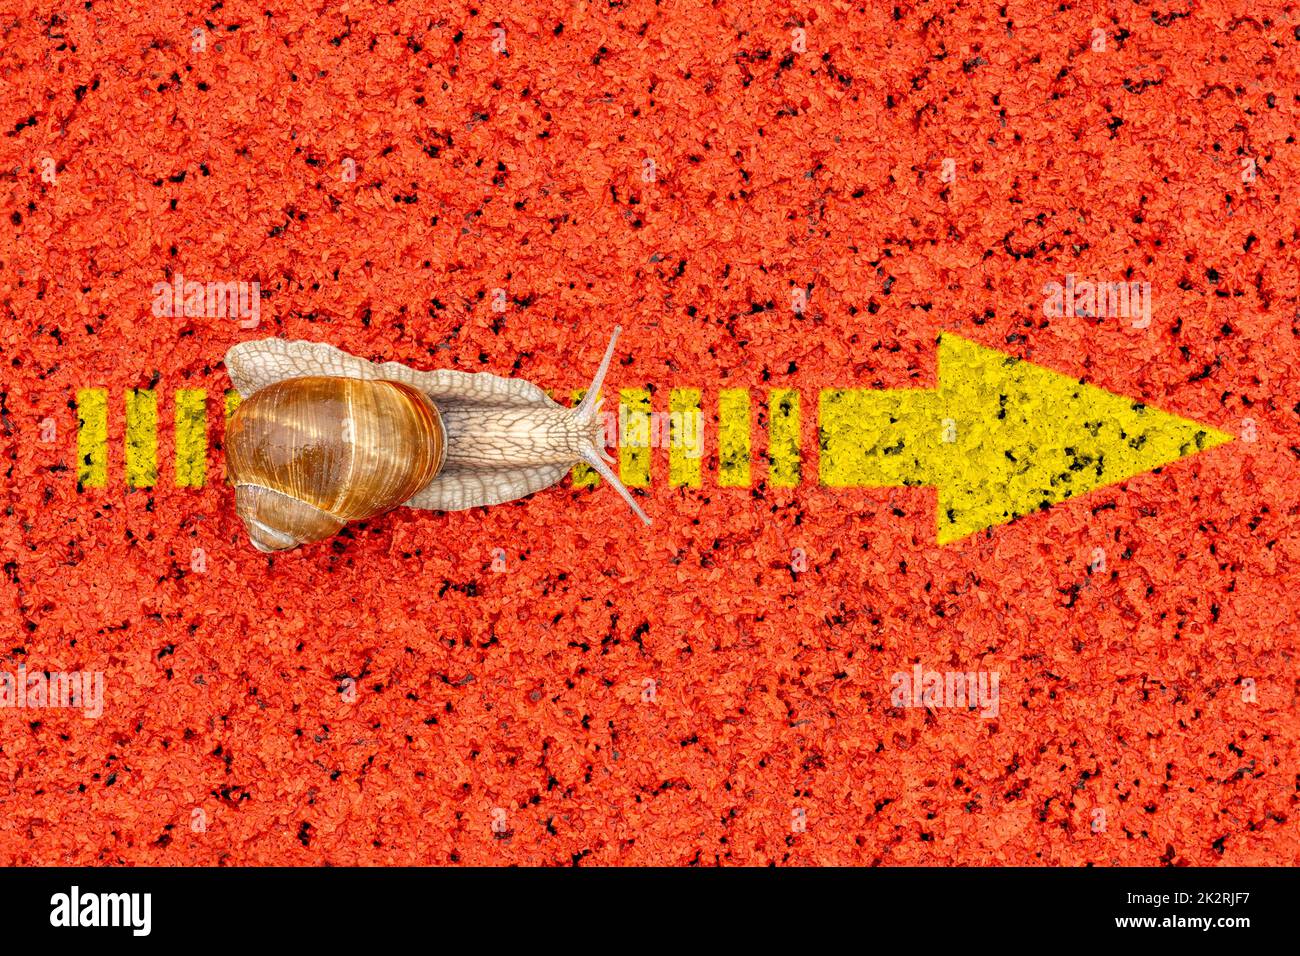 A snail crawling along a yellow arrow sign Stock Photo